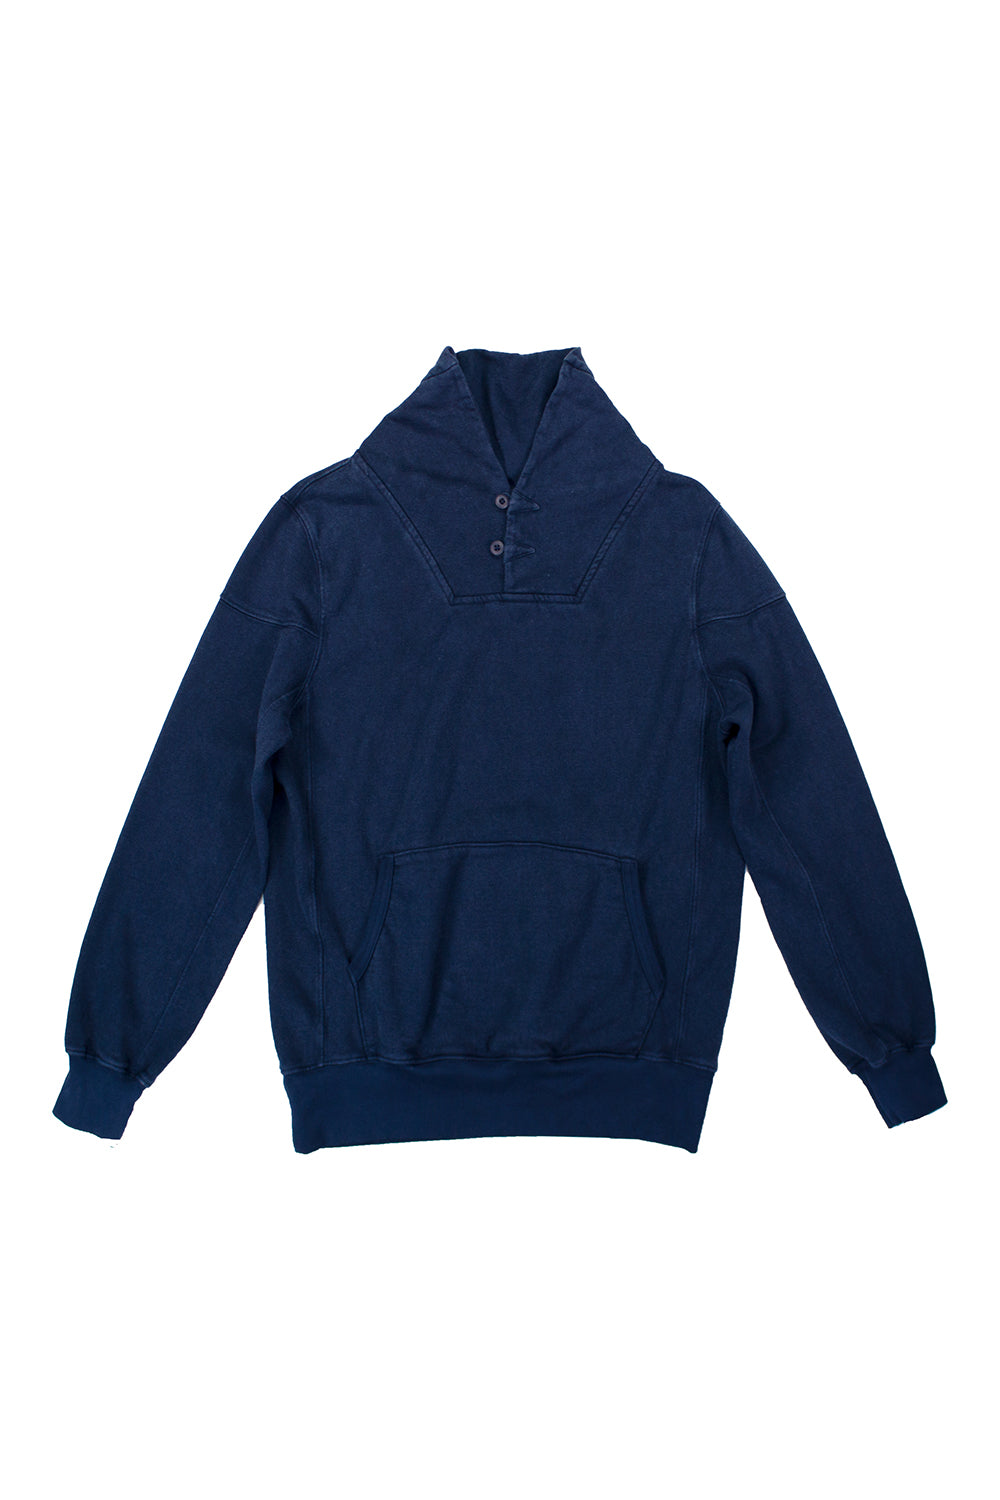 Whittier Sweatshirt | Jungmaven Hemp Clothing & Accessories / Color: Navy